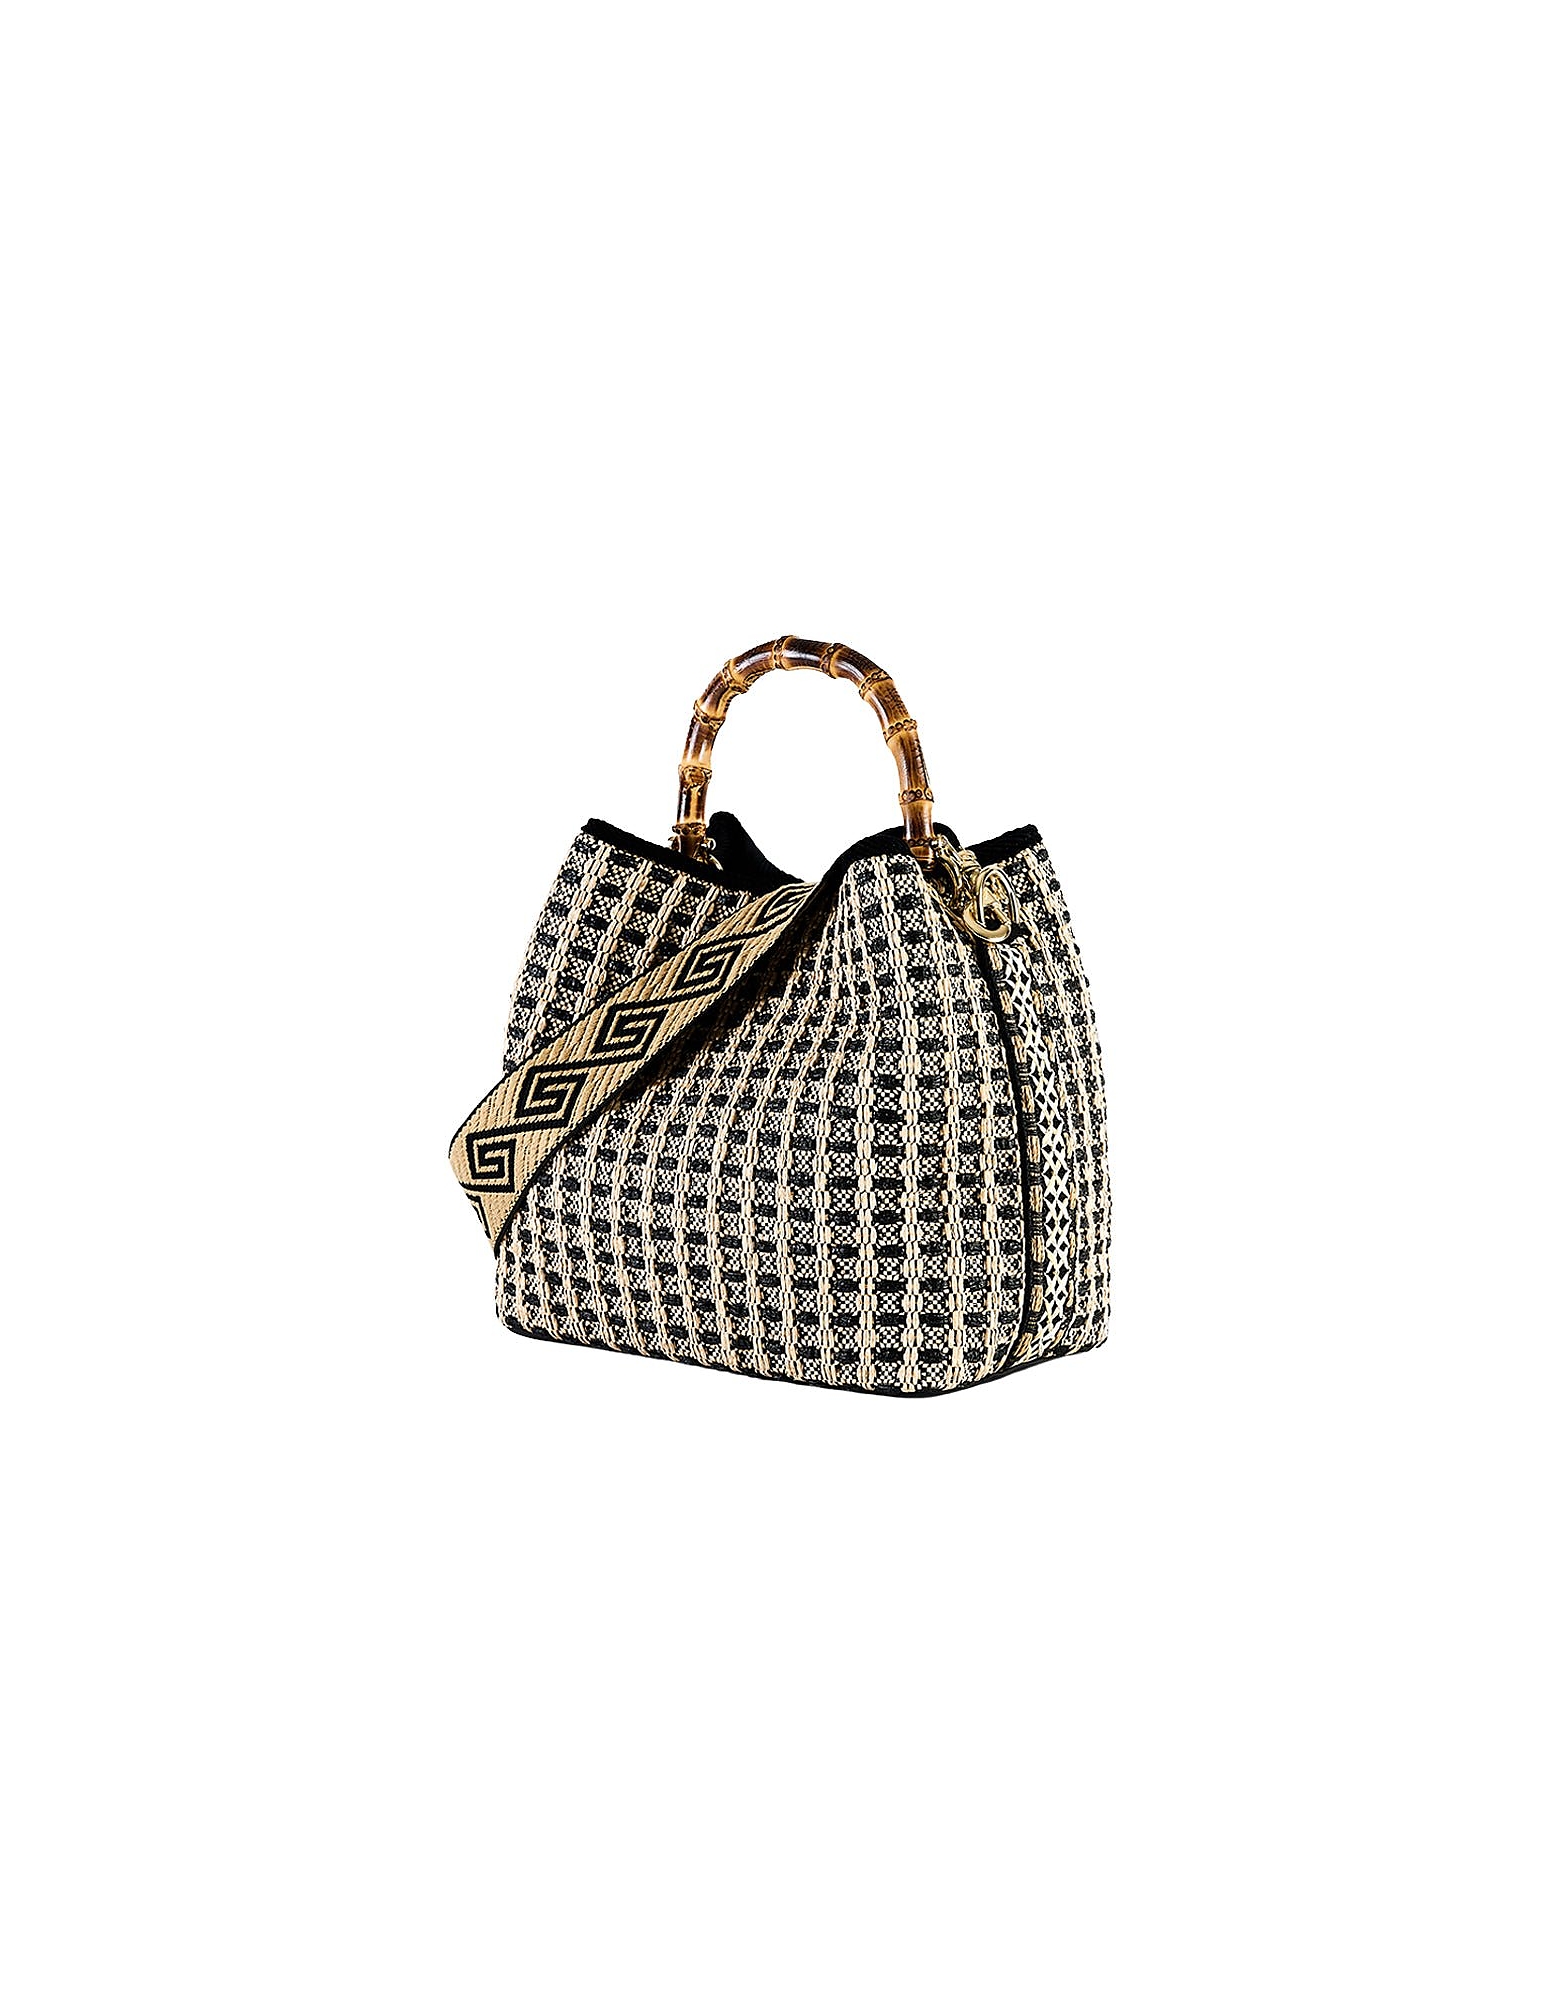 Viamailbag Designer Handbags Coral Cross - Black And White Top Handle Bag In Brown